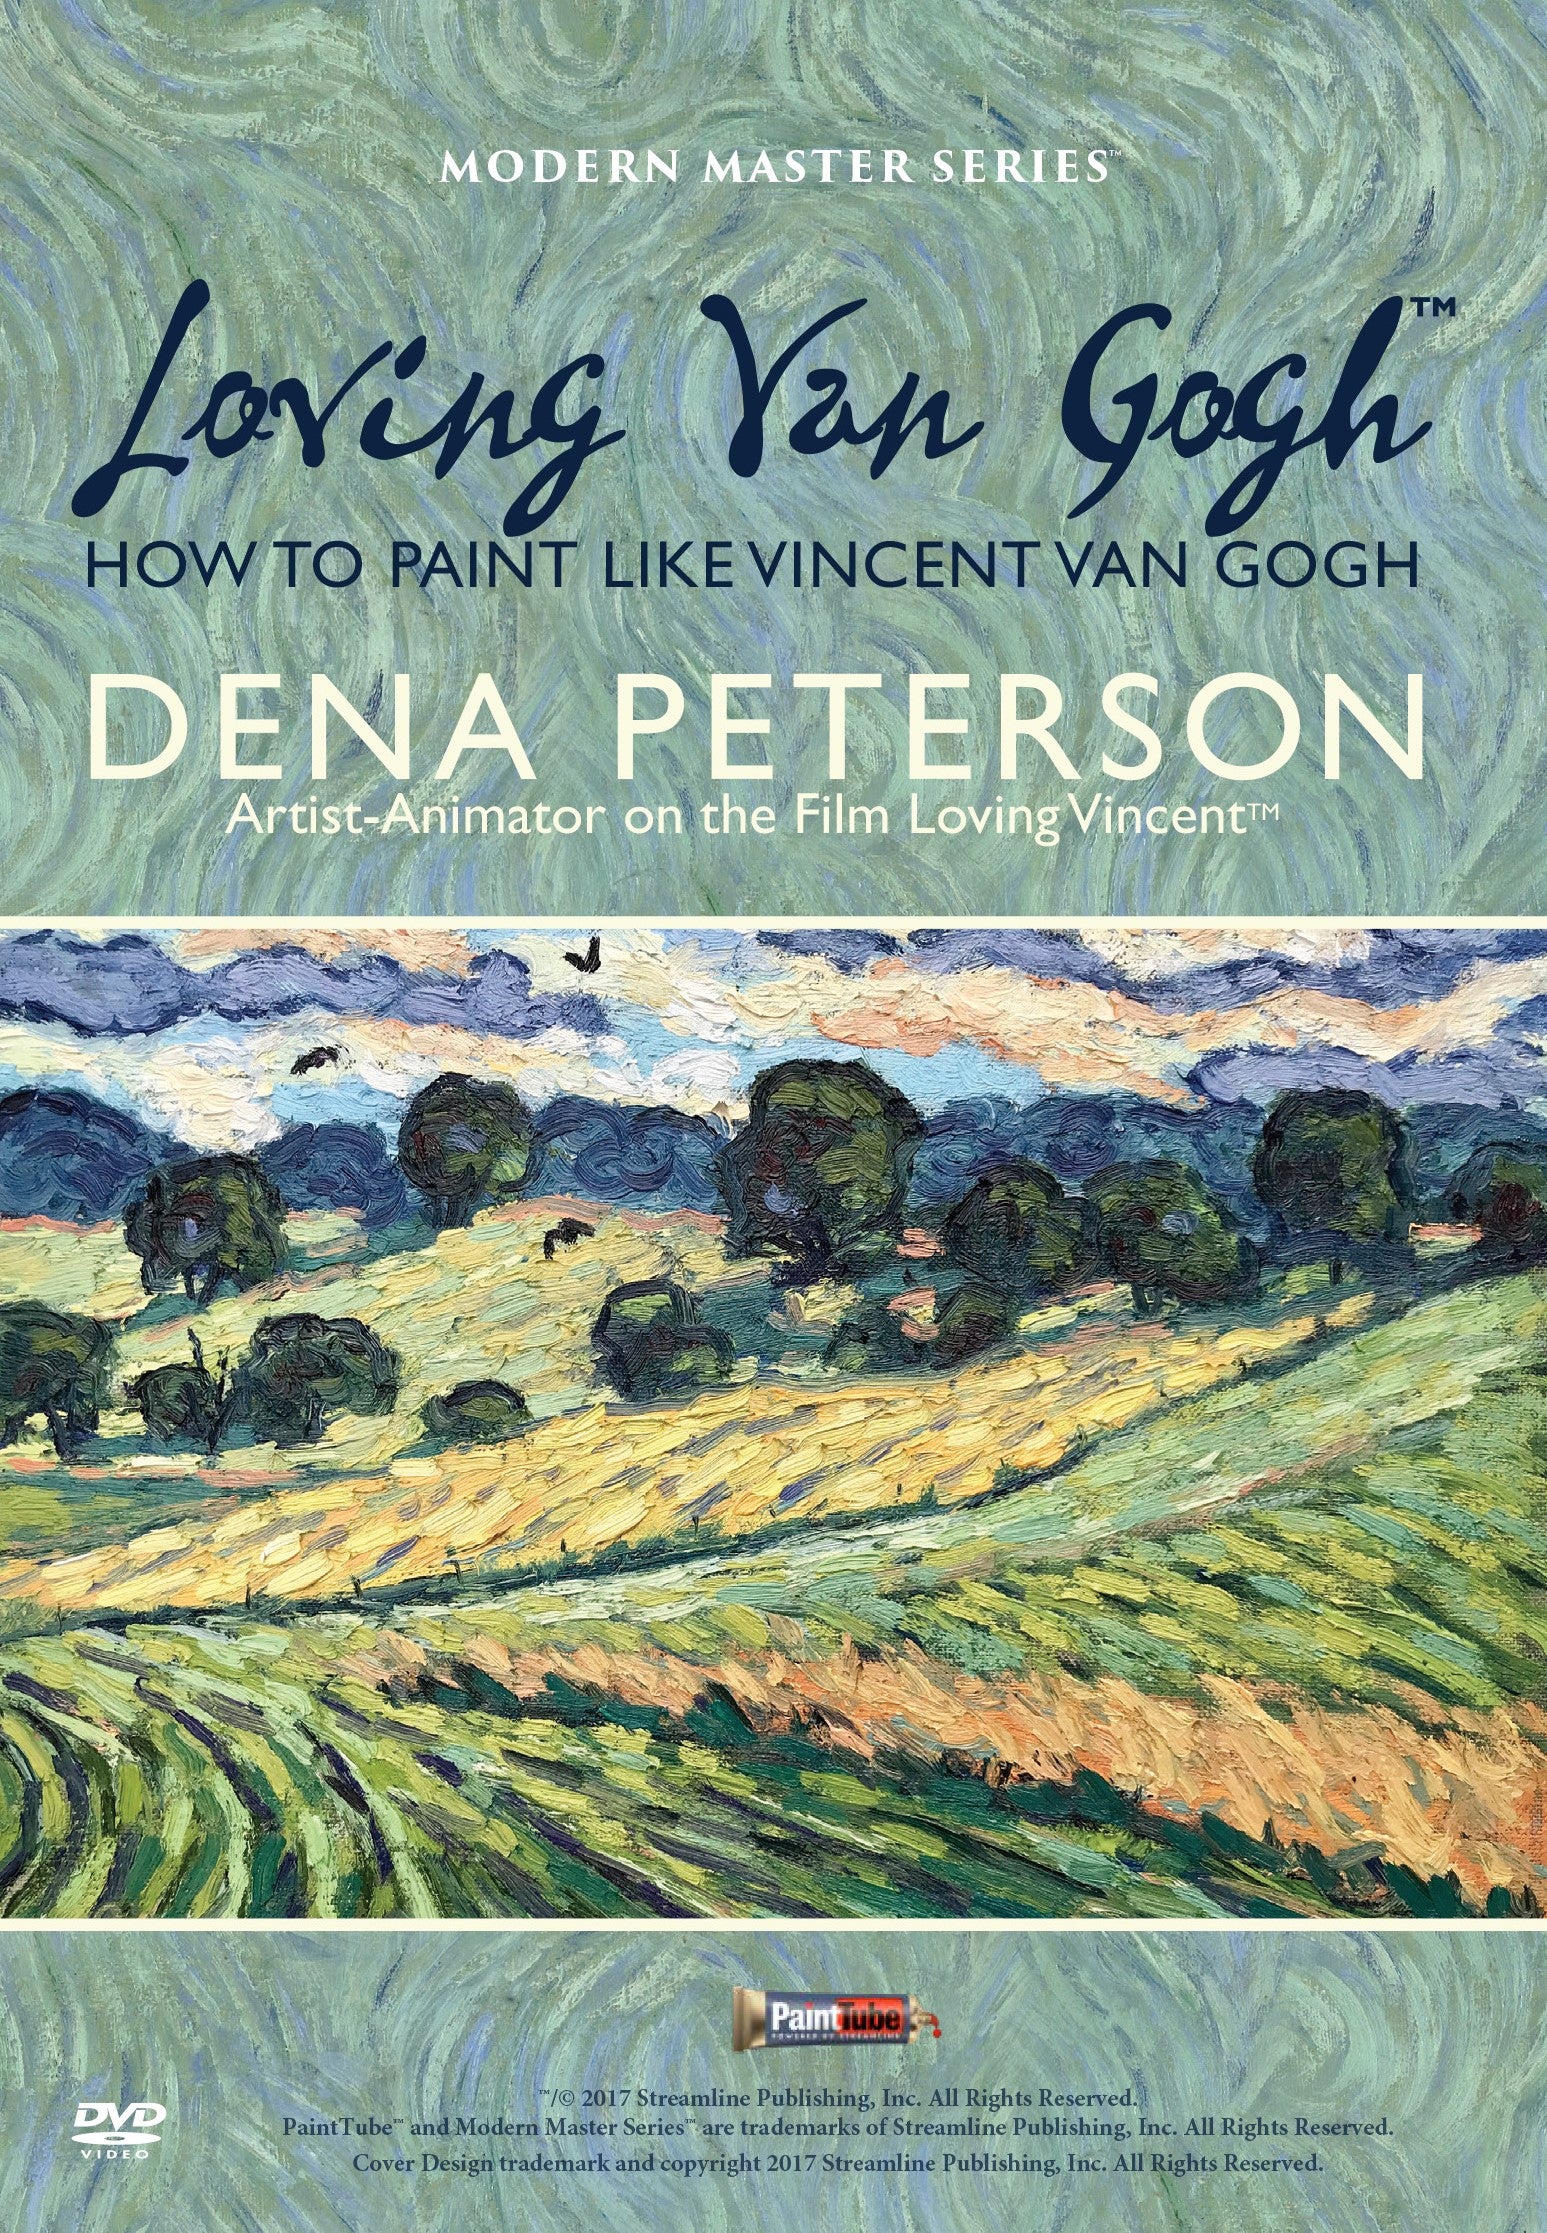 Dena Peterson: Loving Van Gogh